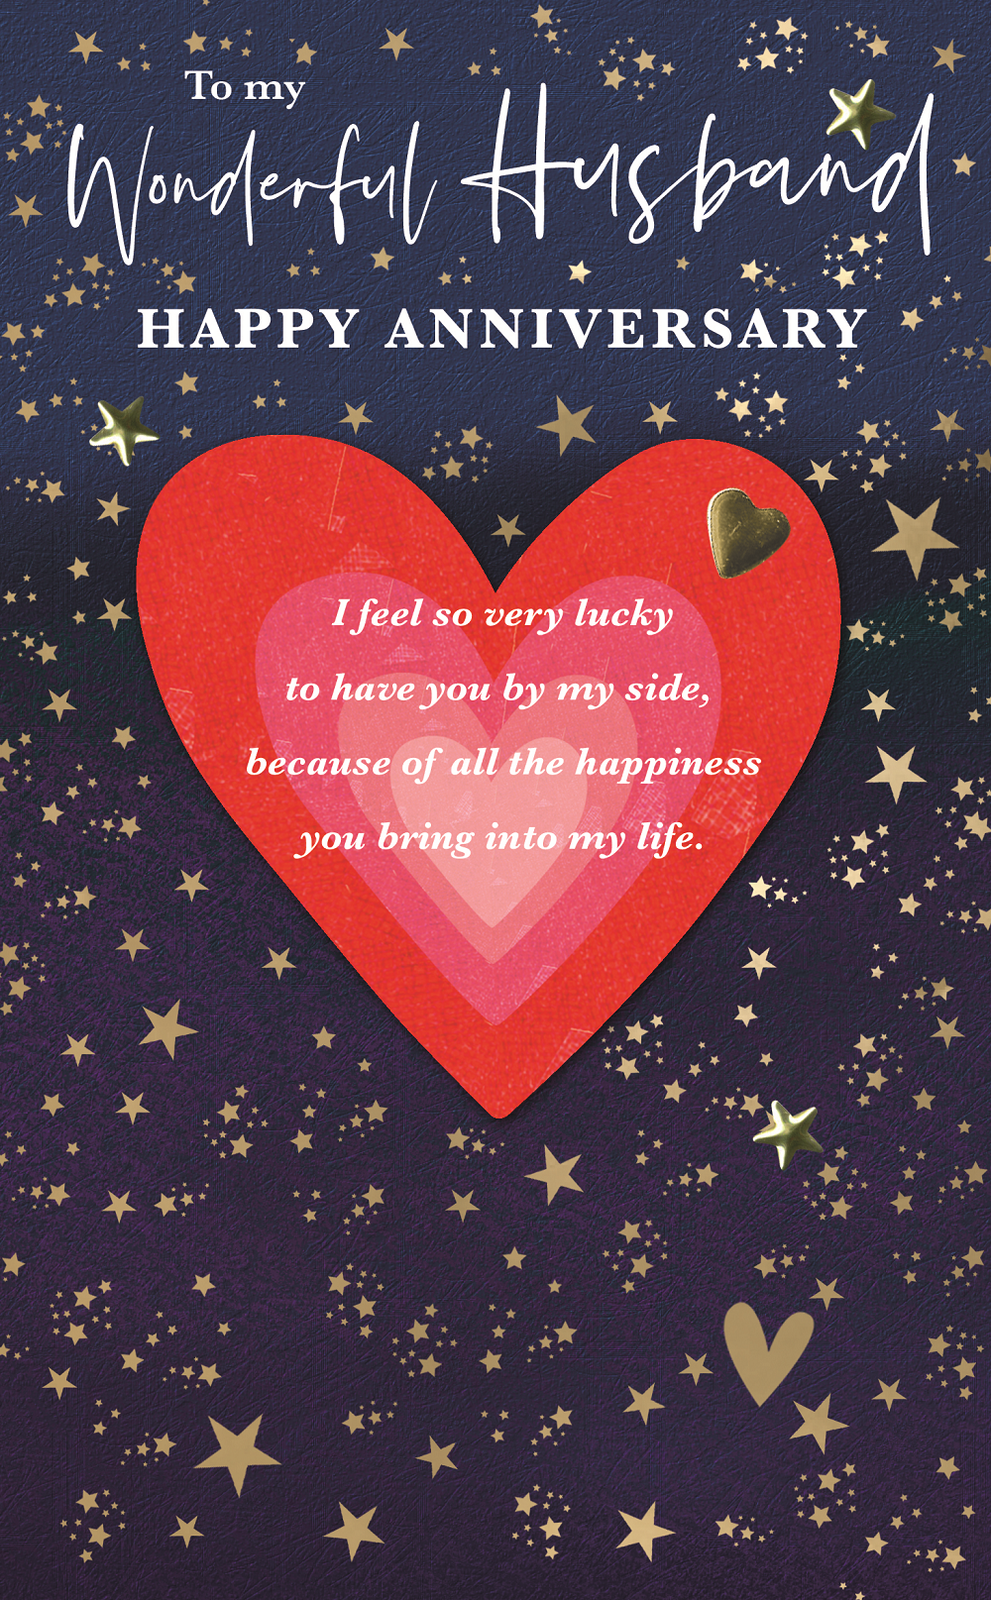 Wonderful Husband Anniversary - Constellations & Heart Greetings Card